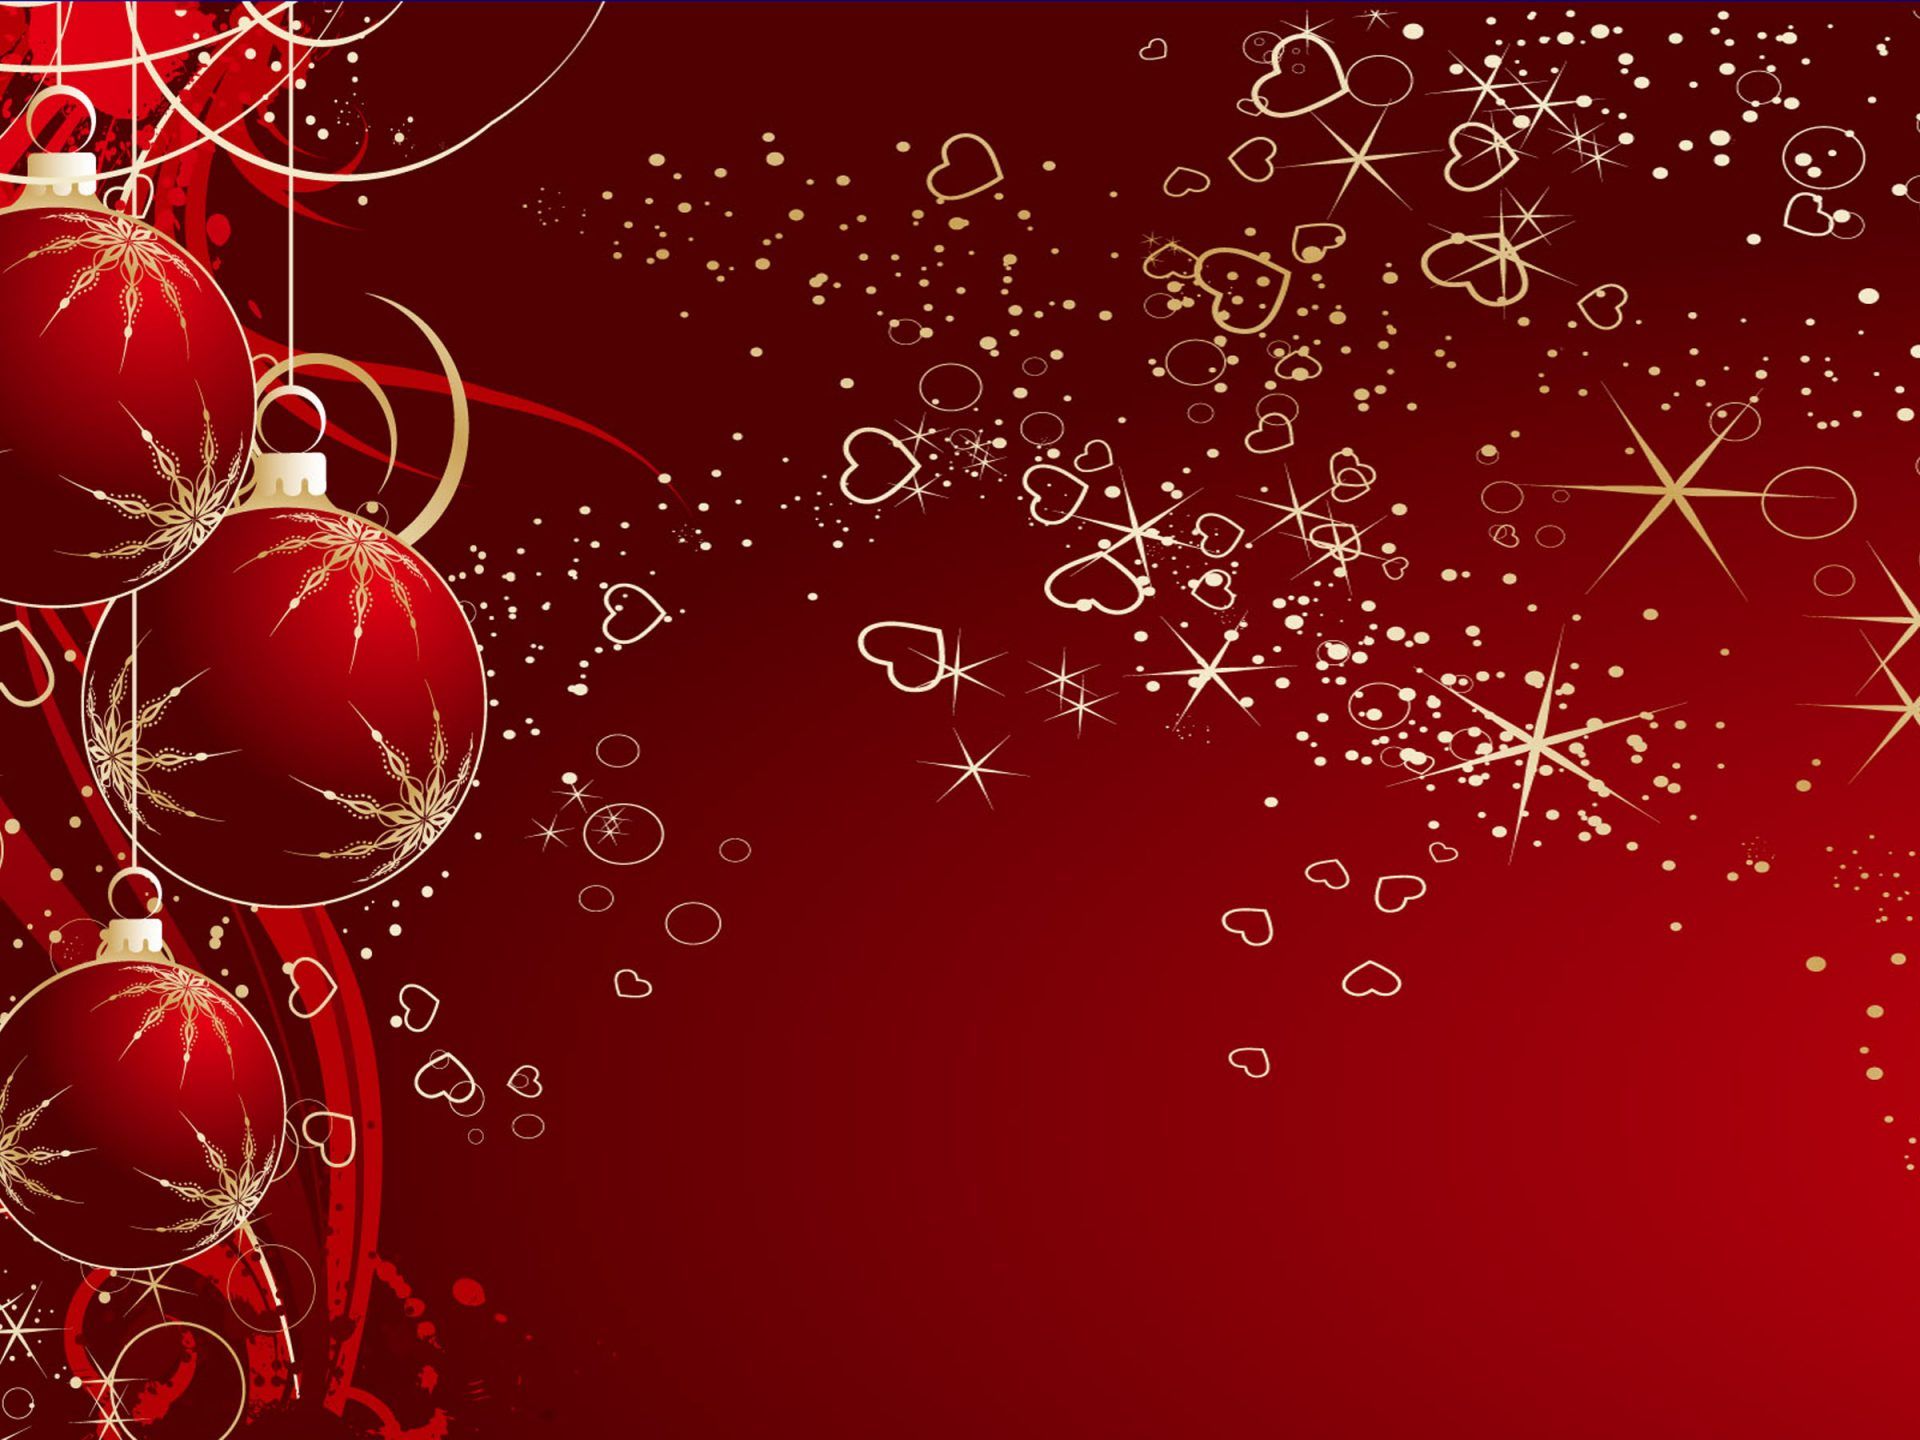 Merry Christmas Christmas Decorations Balloons Hearts Stars Desktop HD Wallpaper For Christmas 2880x1800, Wallpaper13.com